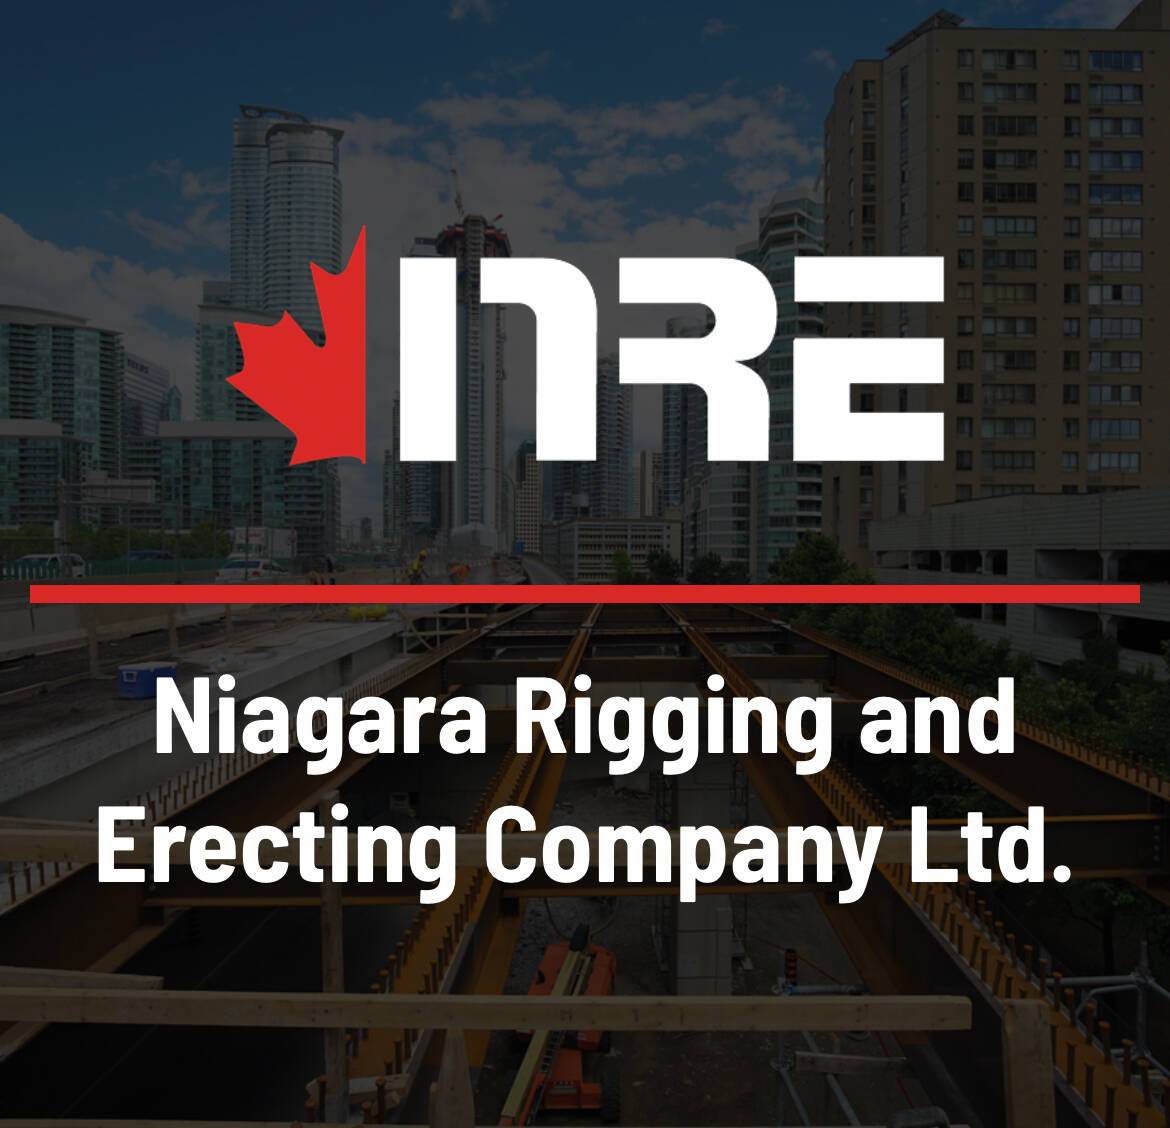 Niagara Rigging and Erecting Company LTD